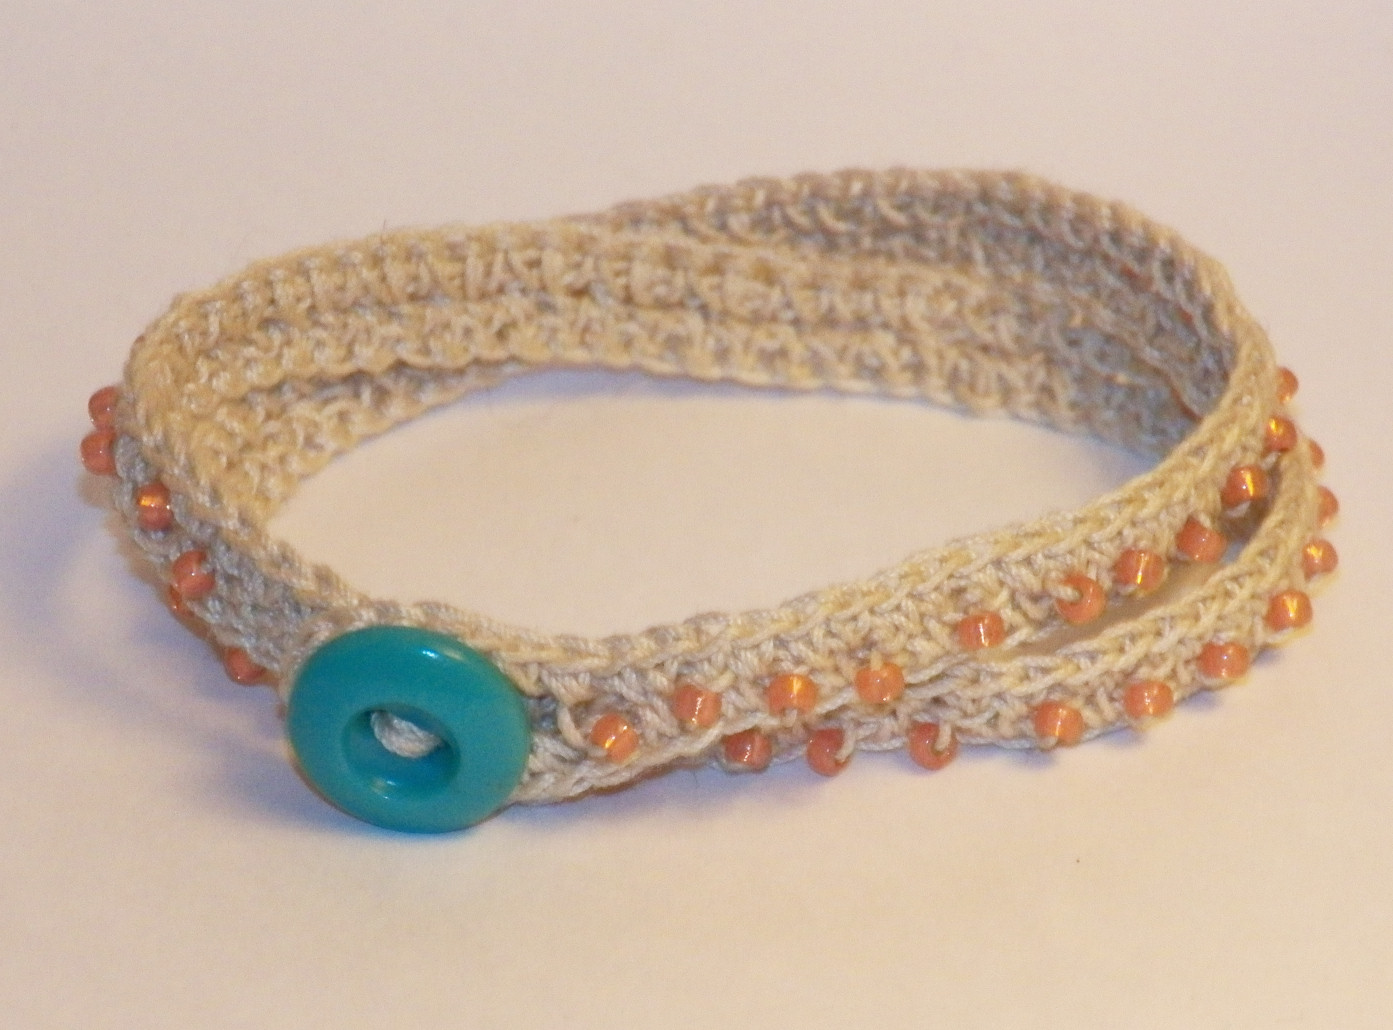 Crochet Bracelet With Buttons - Easy Crochet Patterns